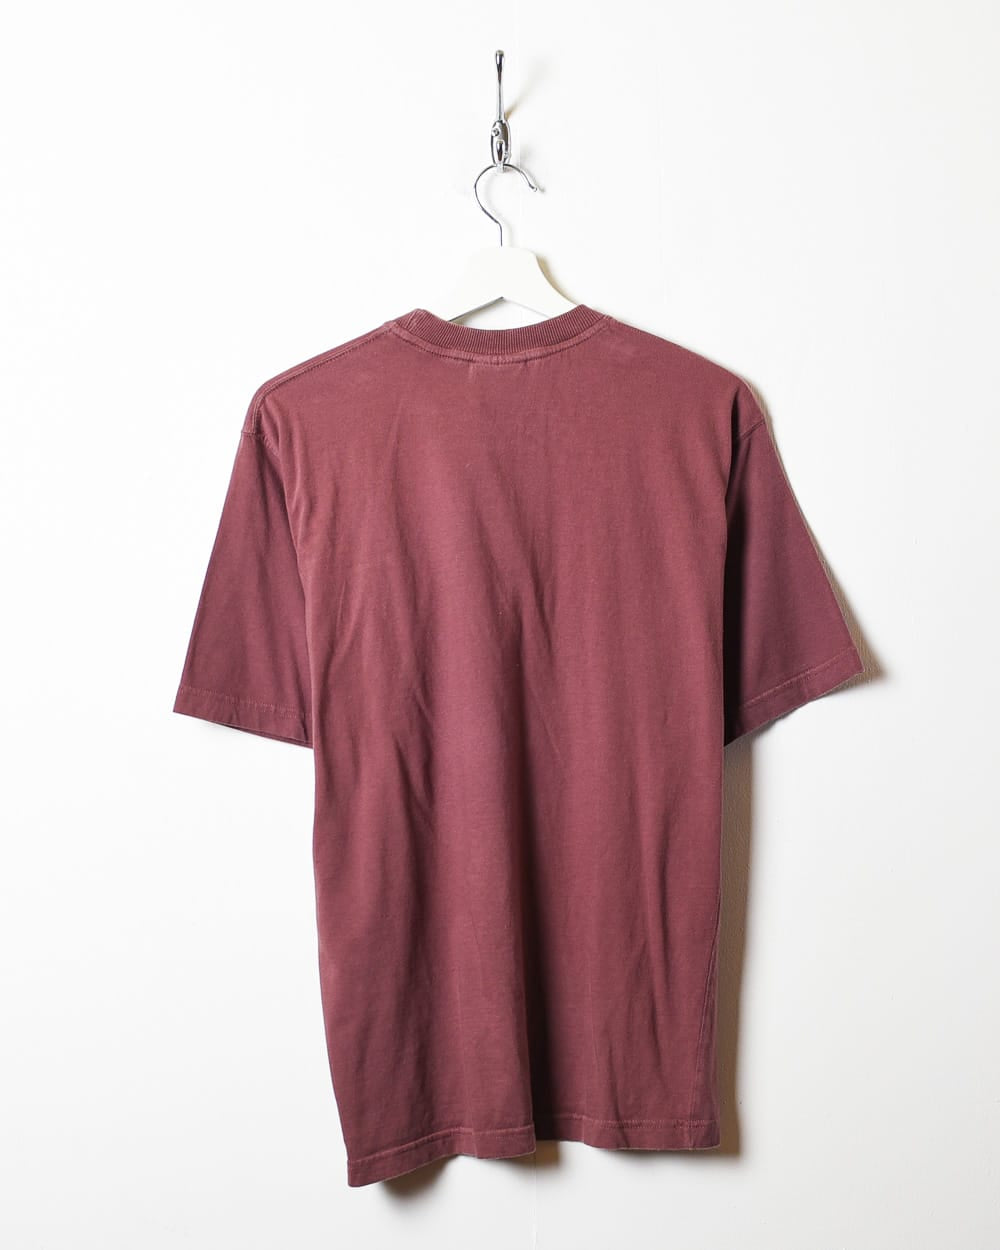 Maroon Reebok T-Shirt - Medium